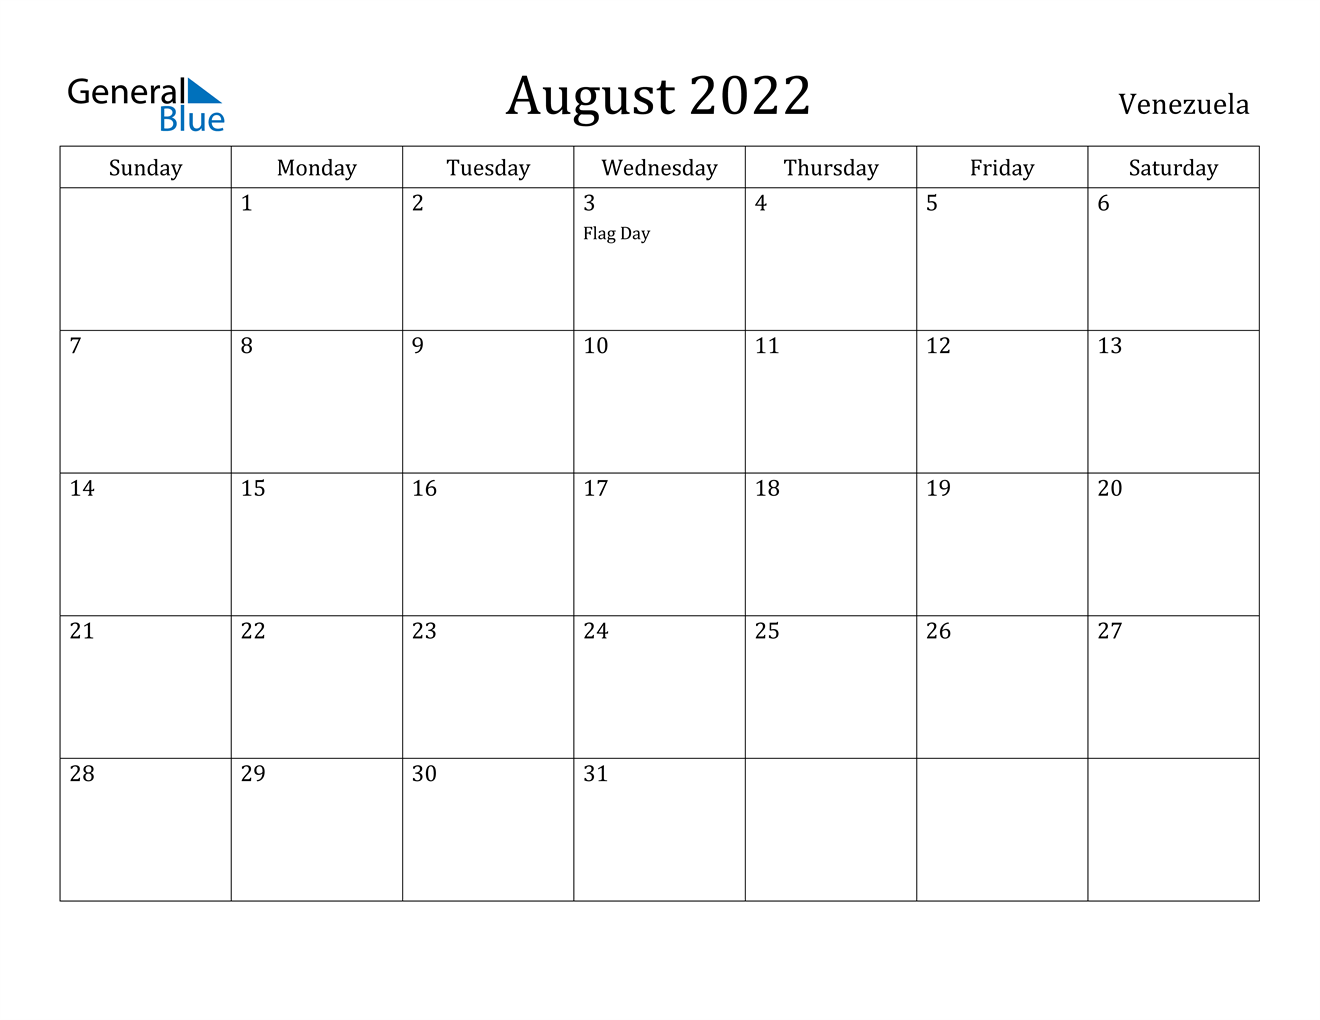 August 2022 Calendar - Venezuela